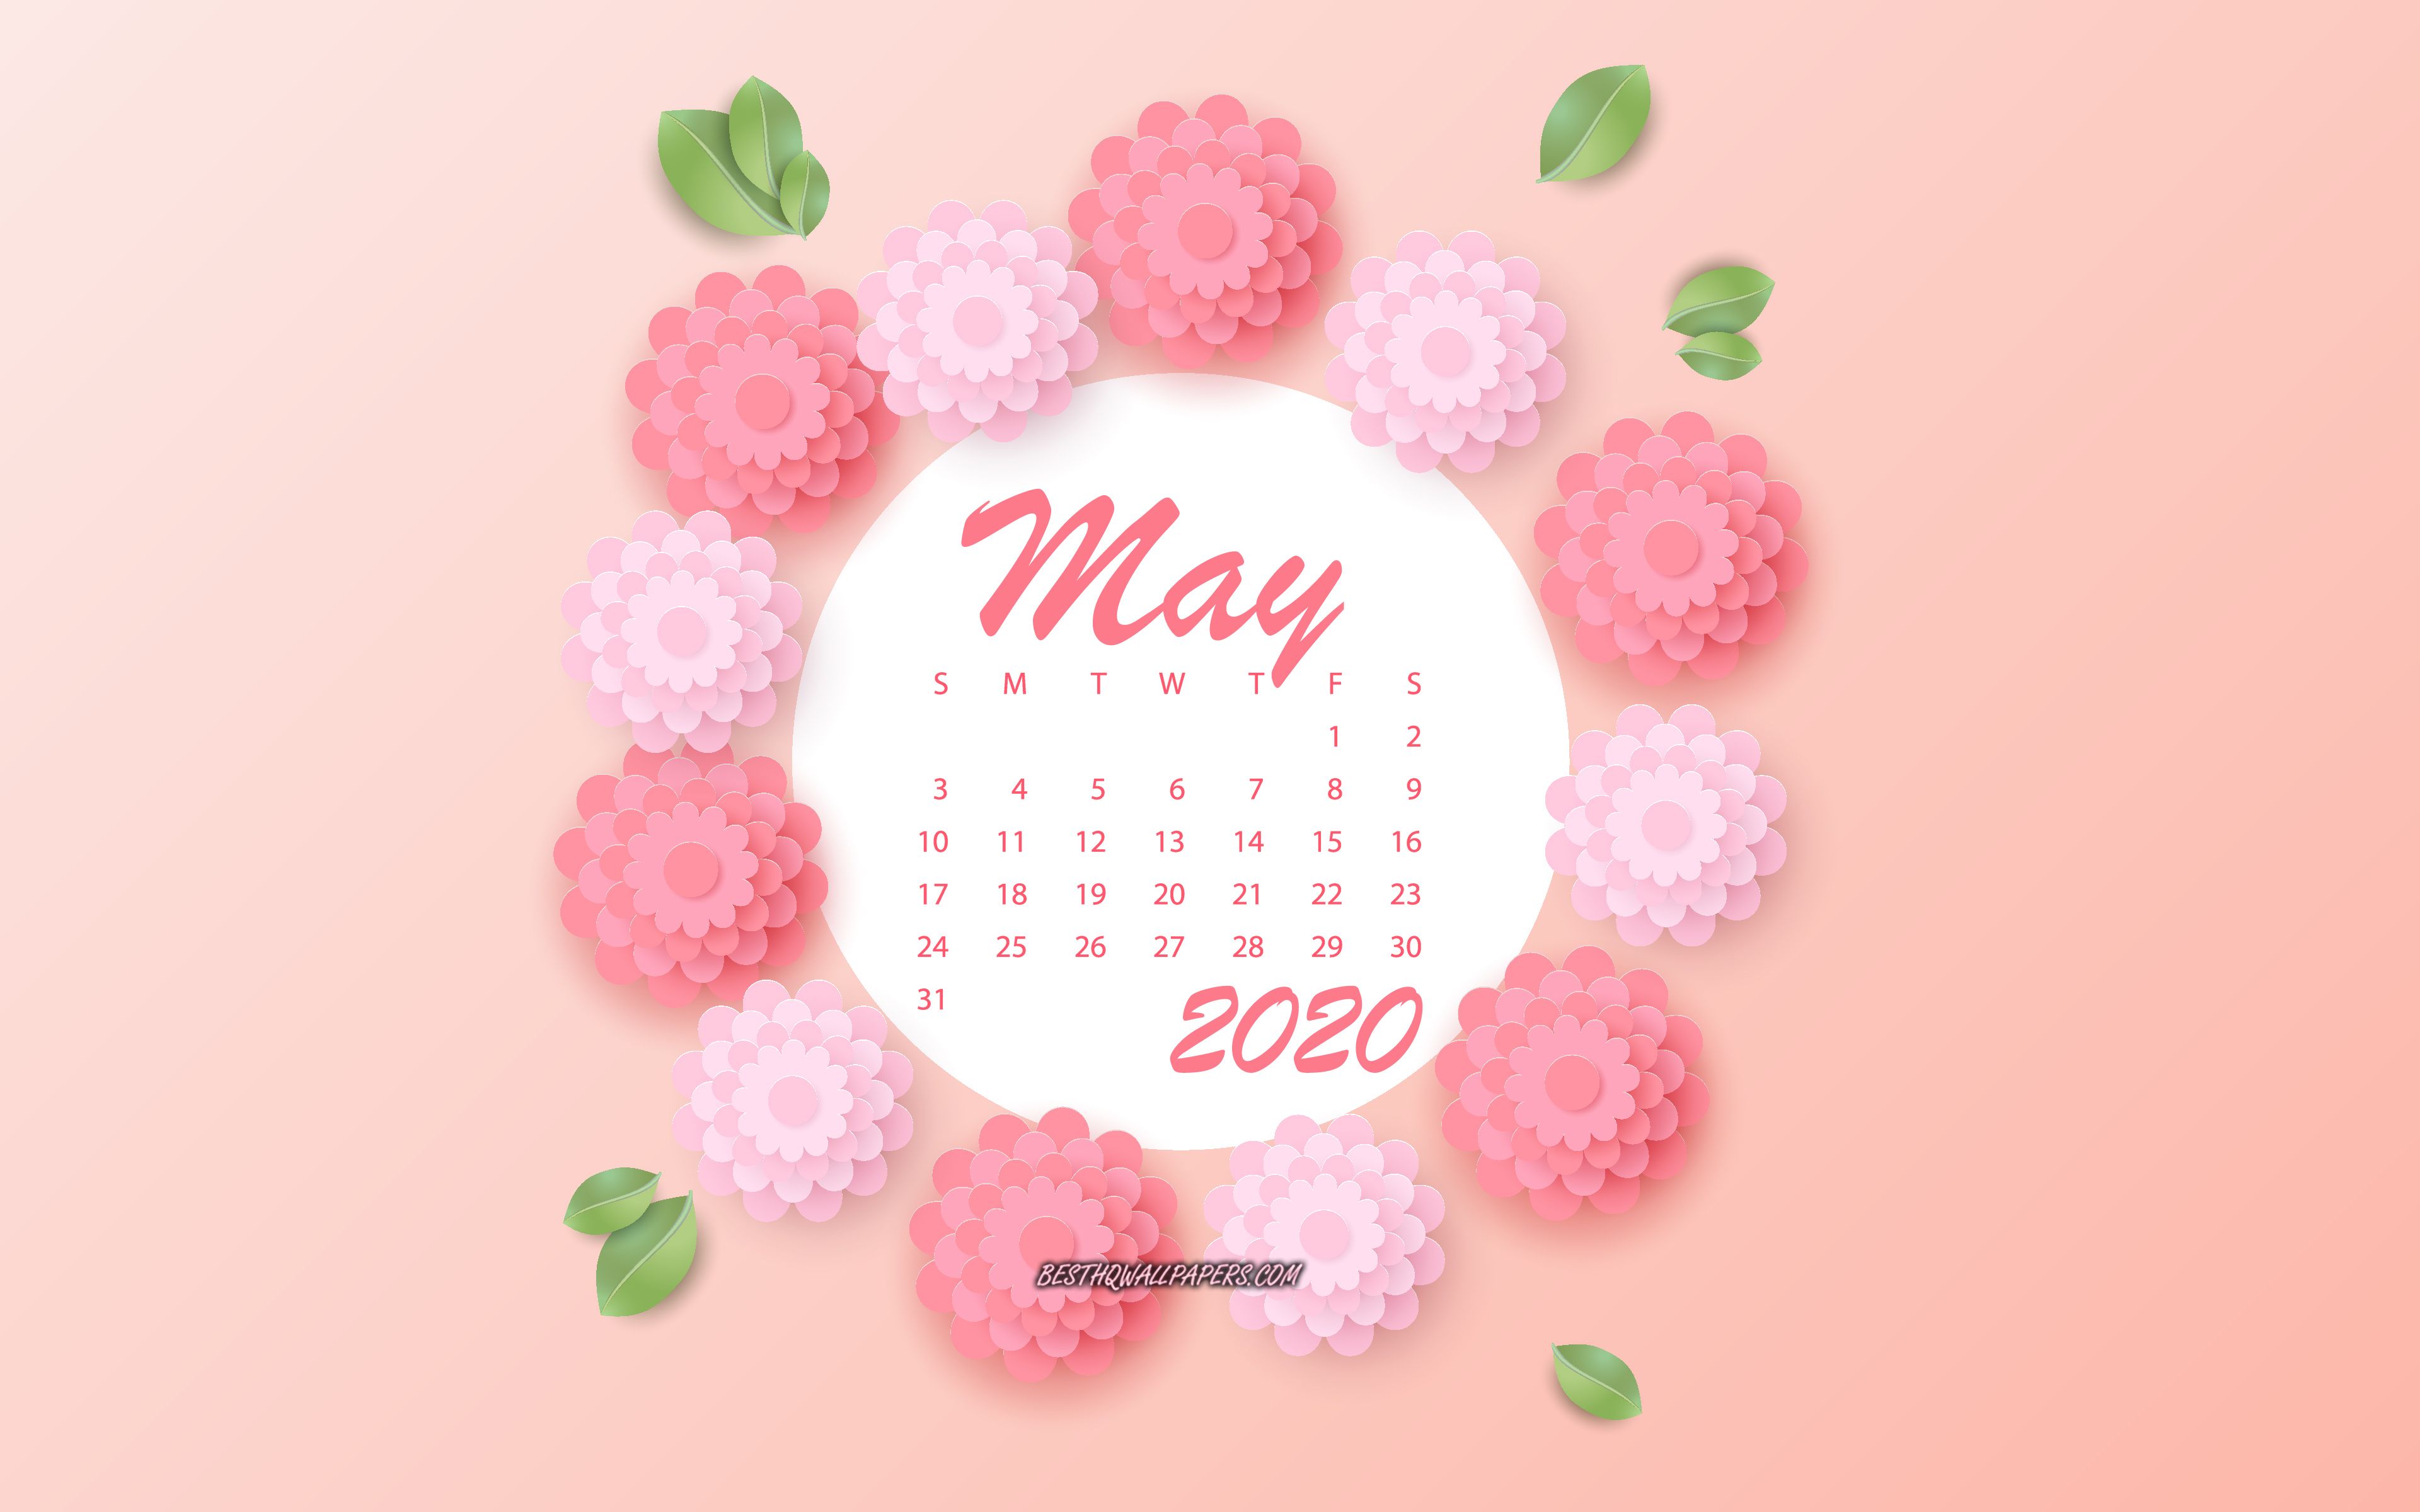 Download wallpaper 2020 May Calendar, pink spring flowers, red